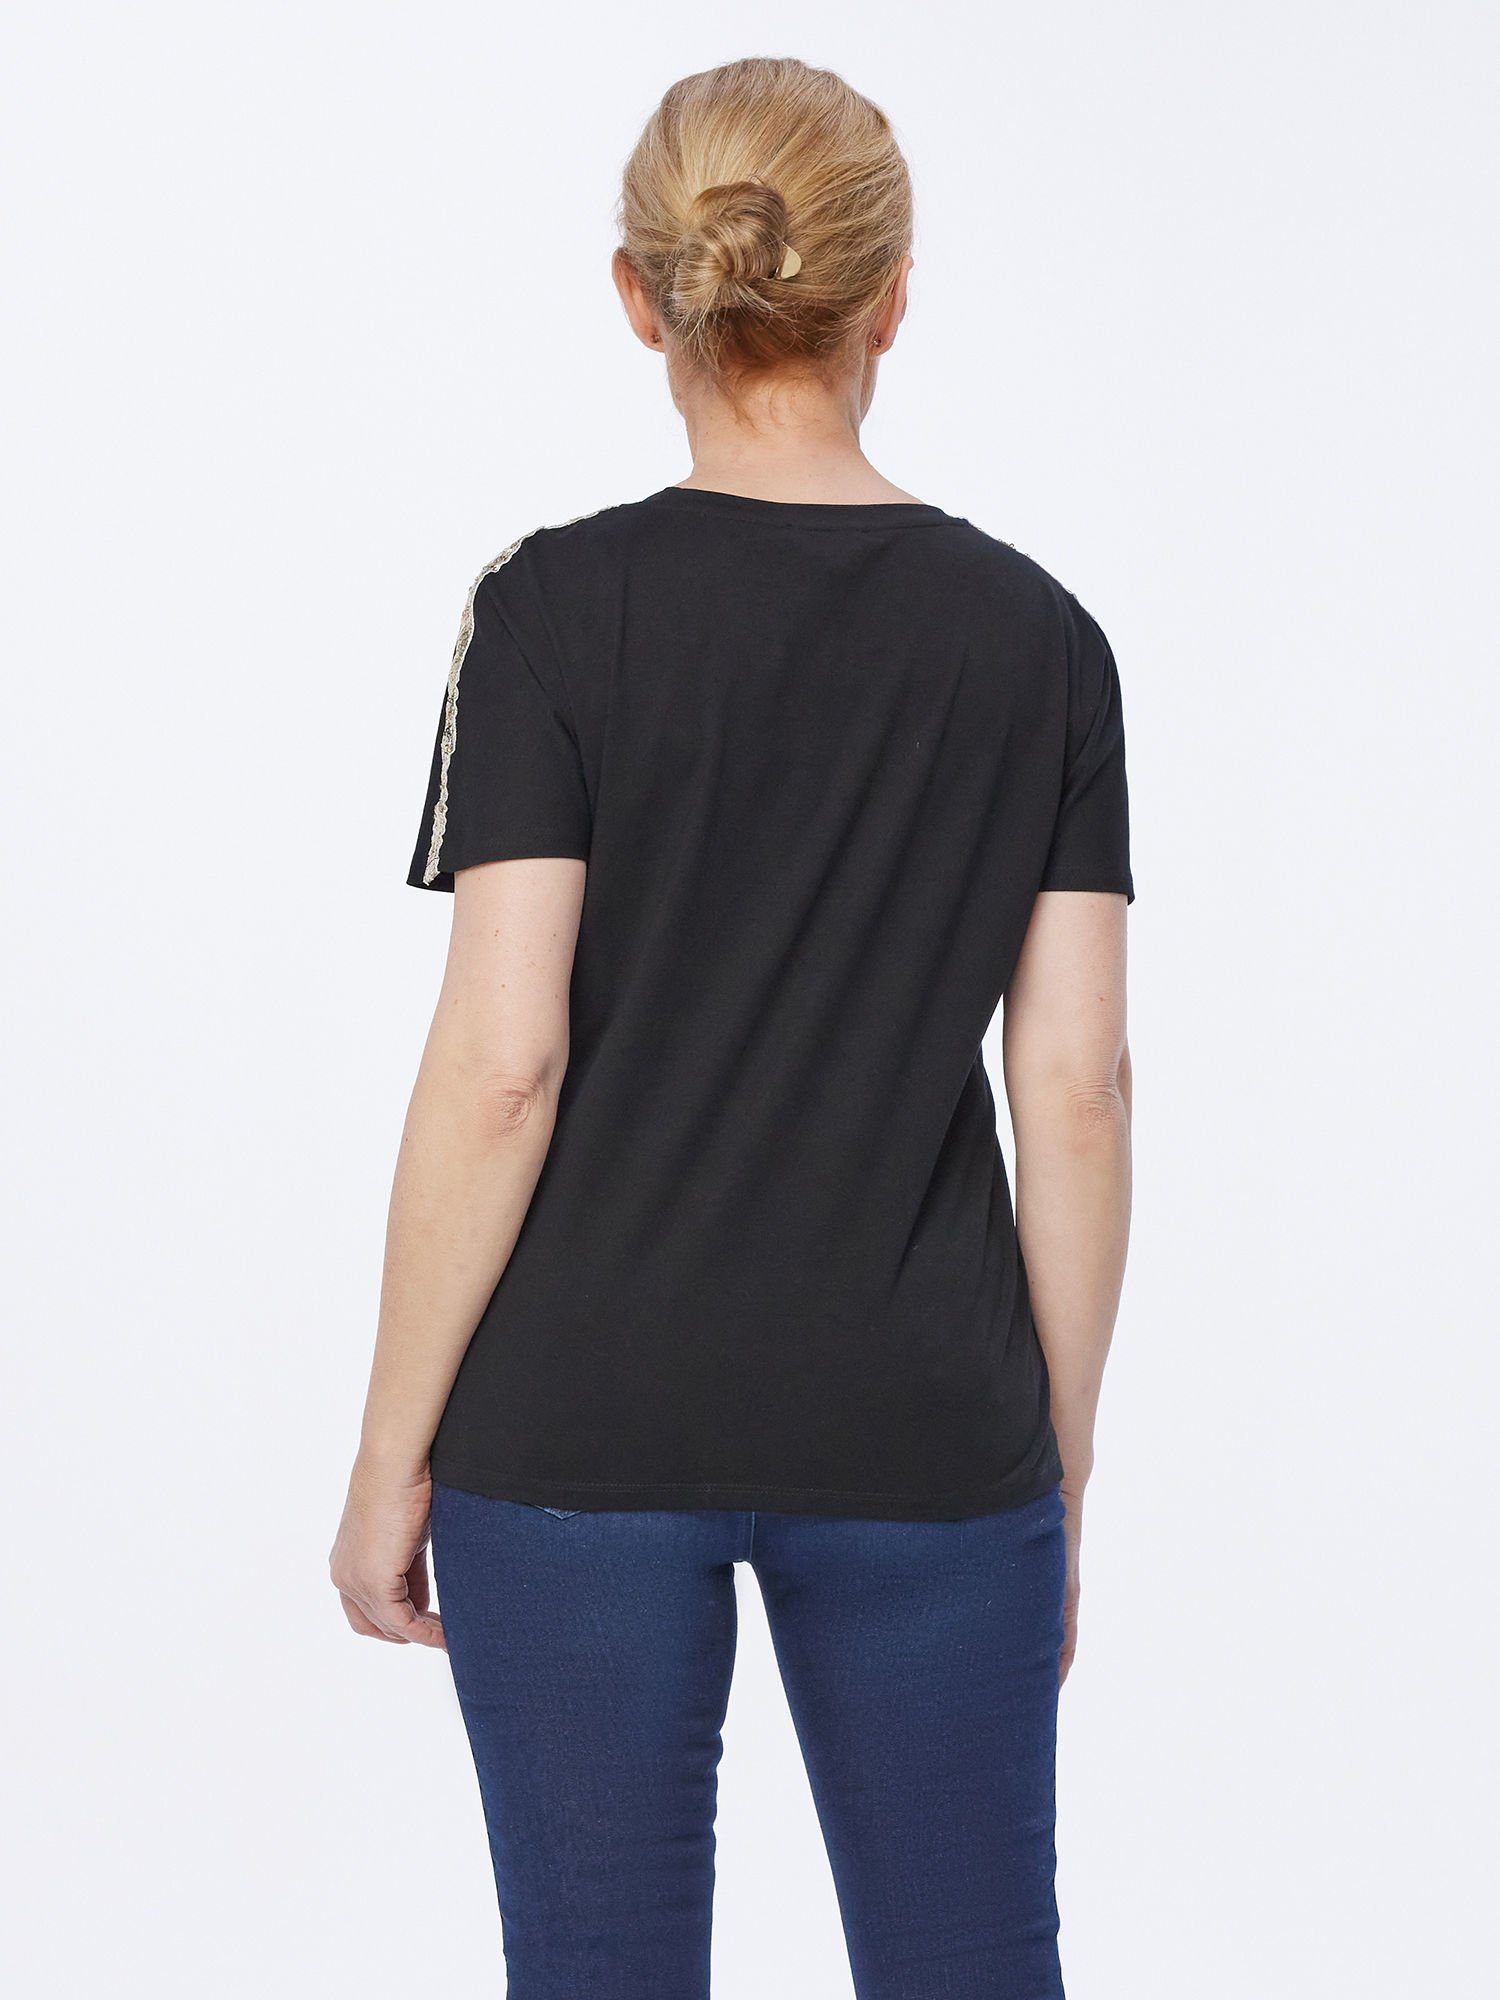 Christian Materne T-Shirt Kurzarmbluse schwarz Stern-Motiv mit